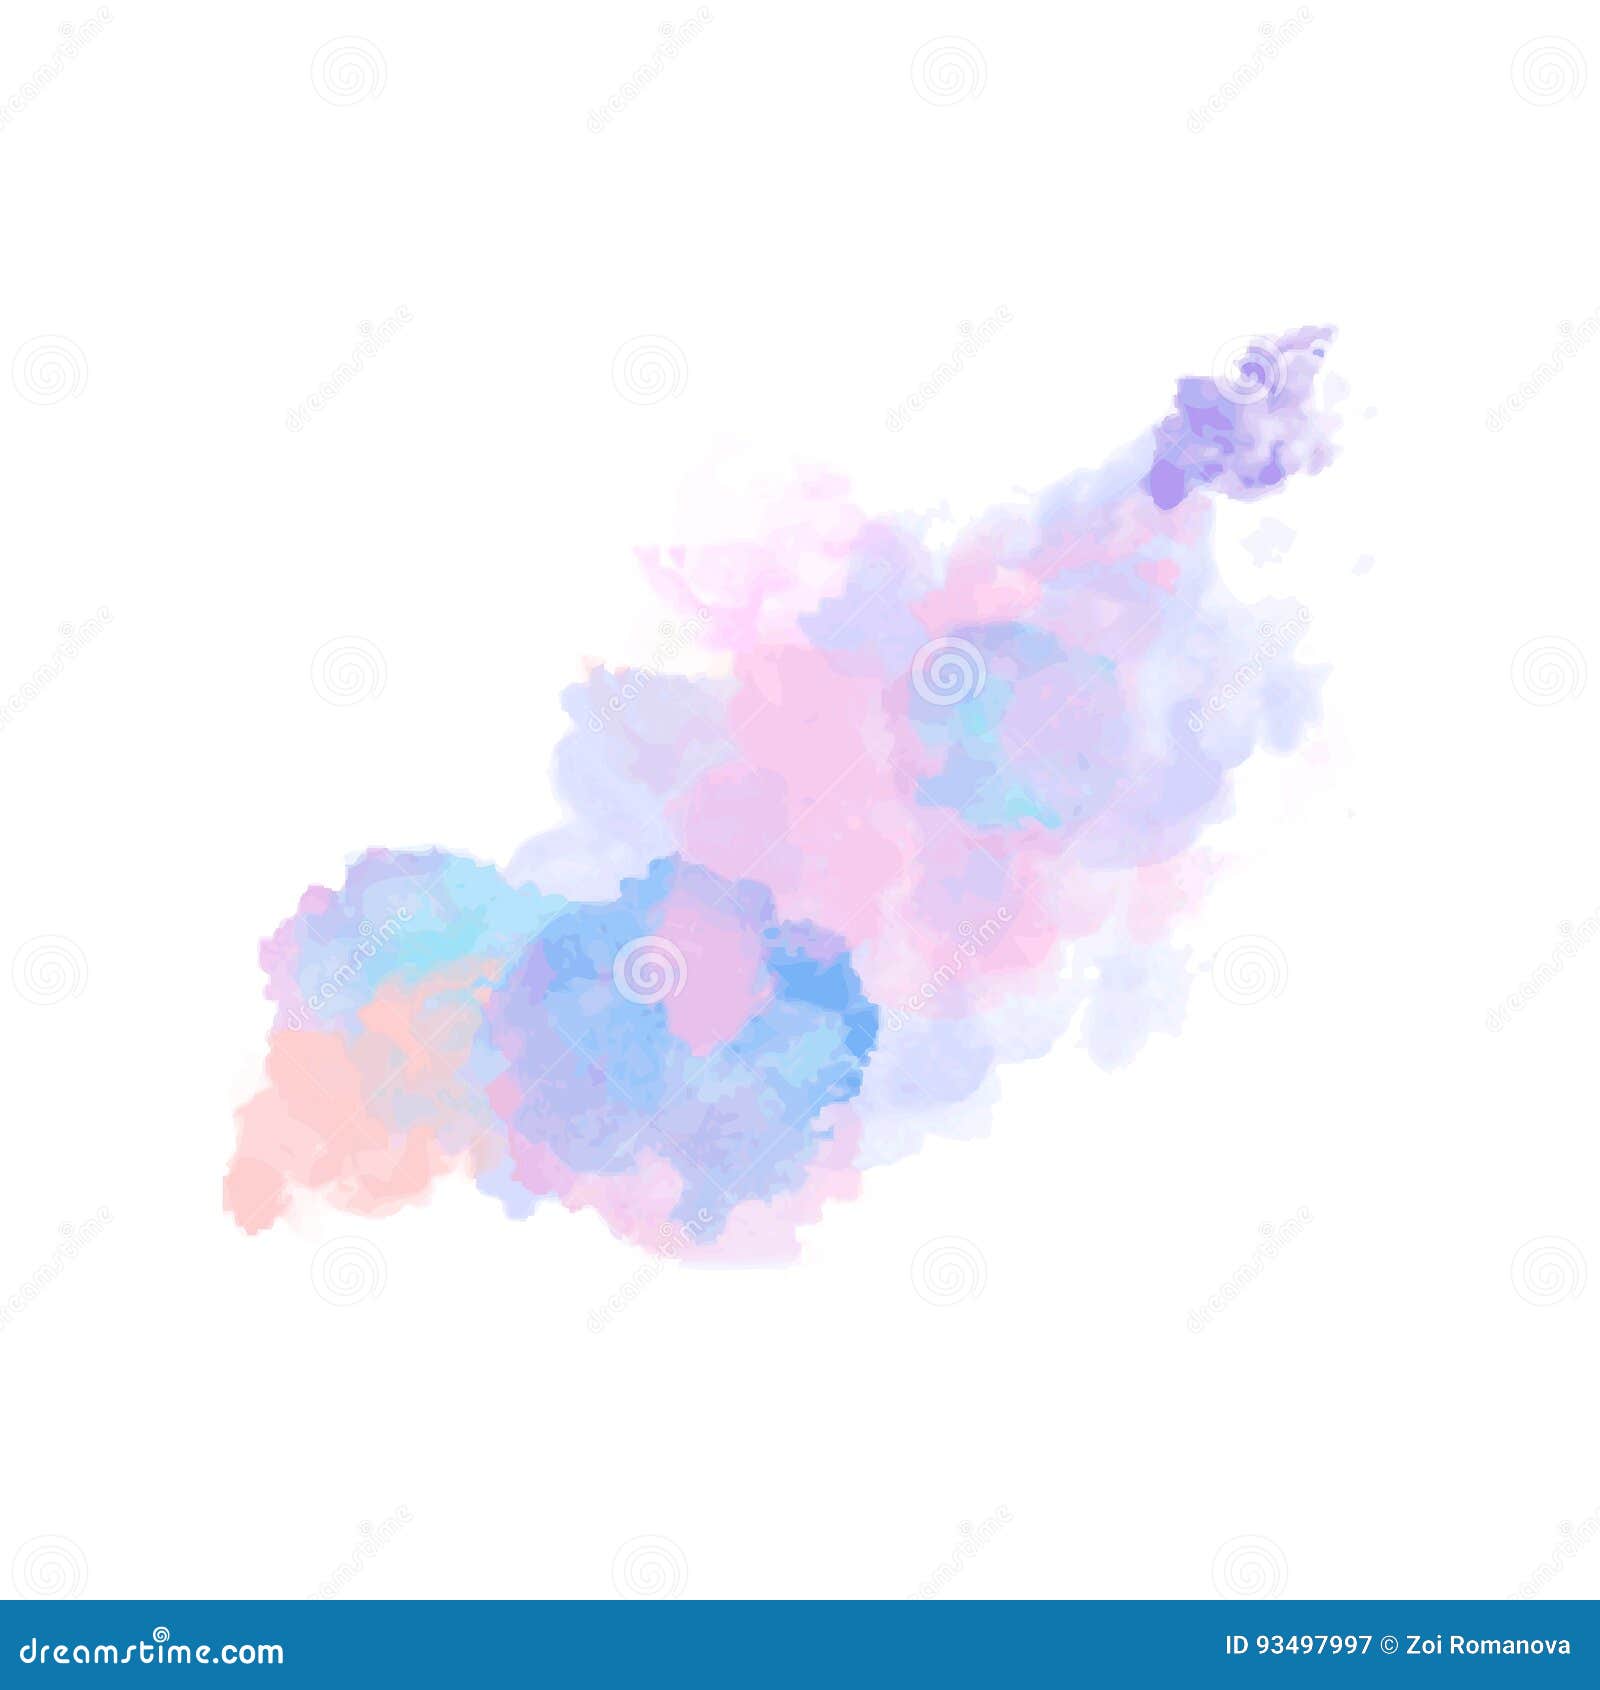  watercolor splash texture background . hand-drawn blob, spot. watercolor effects. blue winter seasonal colors abstr